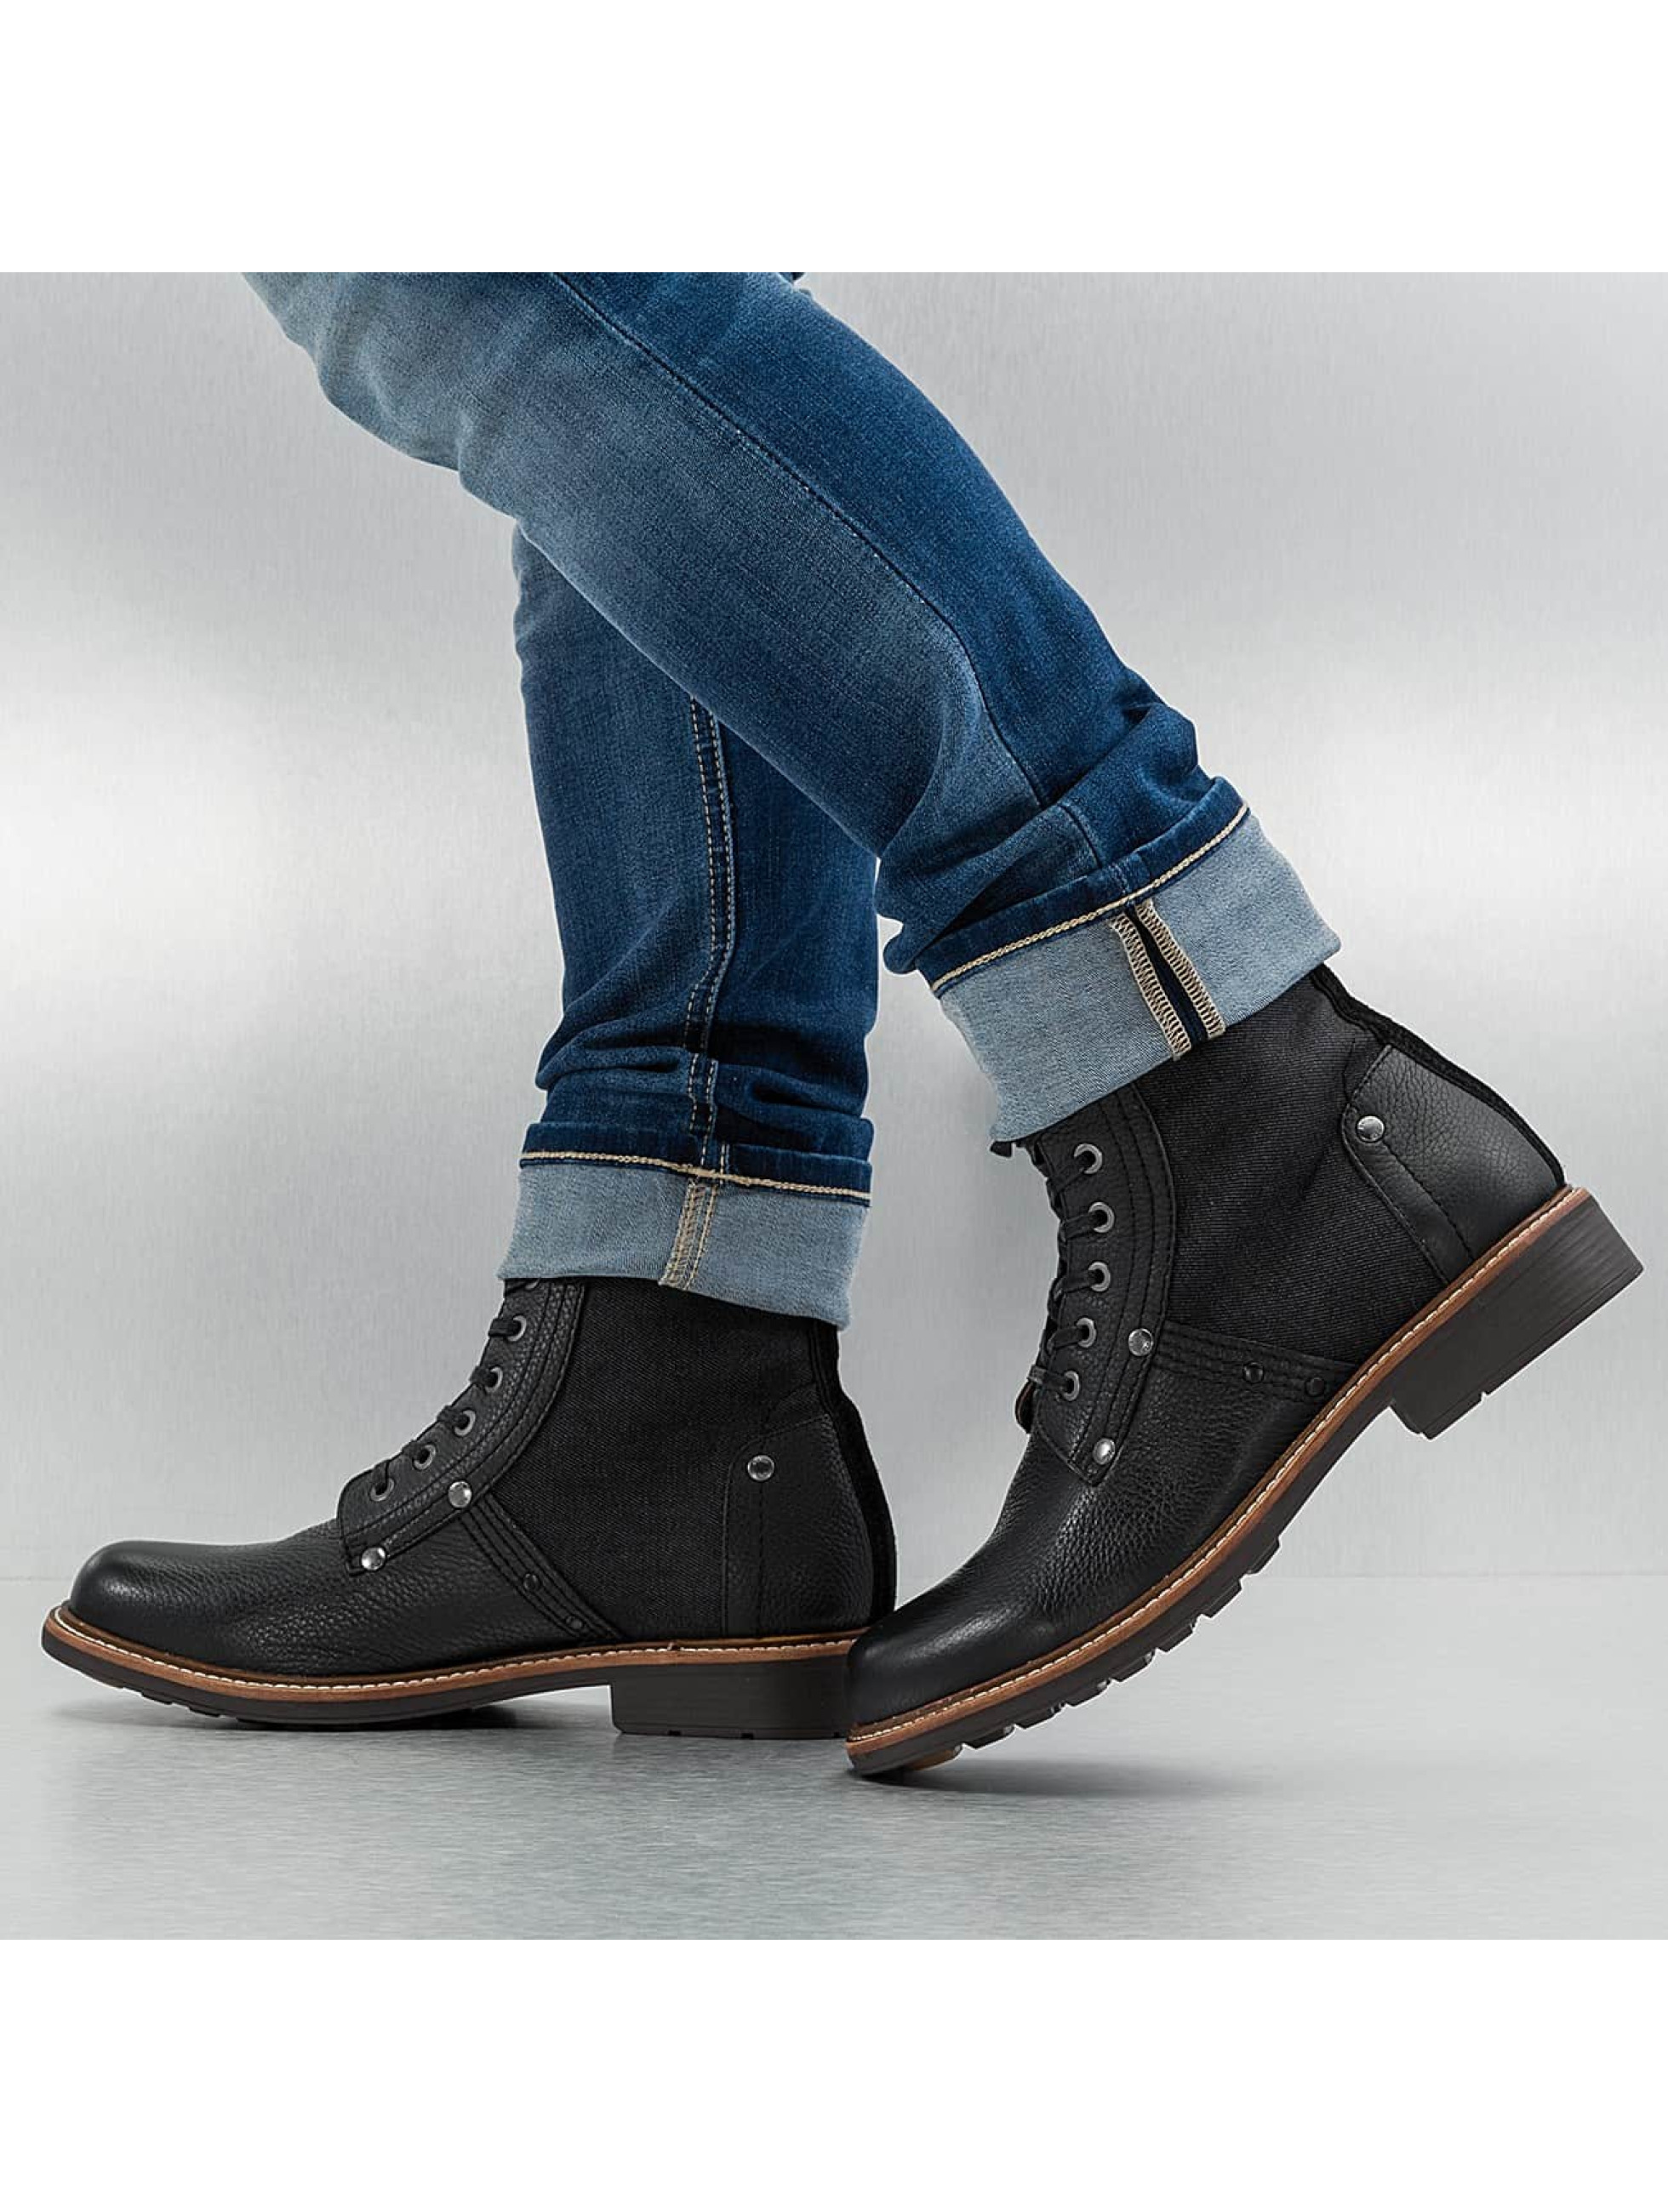 G-Star Chaussures / Chaussures montantes Labour Leather en noir